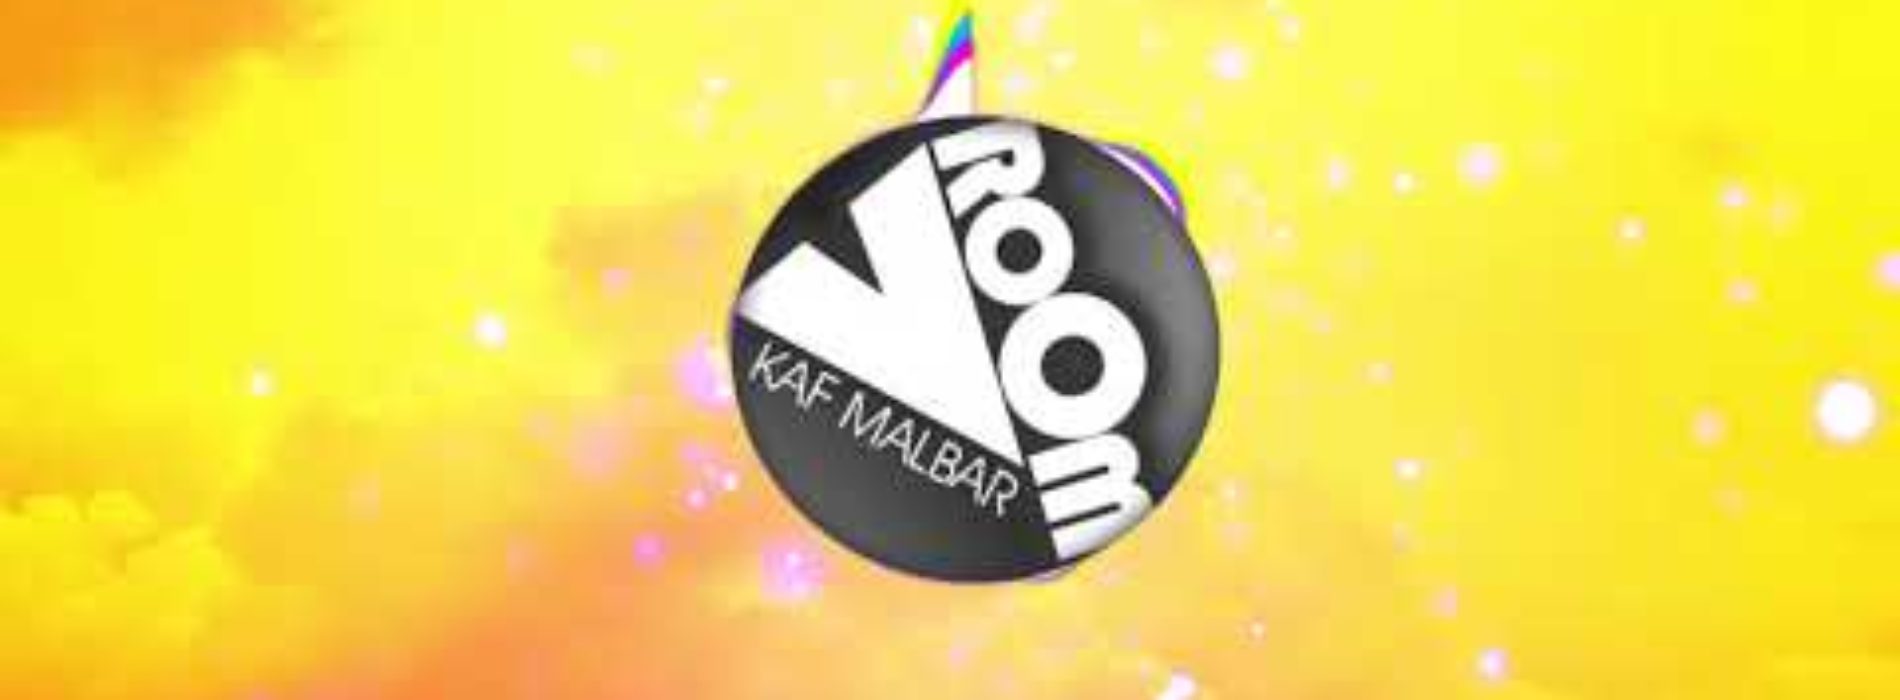 Kaf Malbar feat Dj Sebb – Vroom ( Audio ) – Juillet 2018